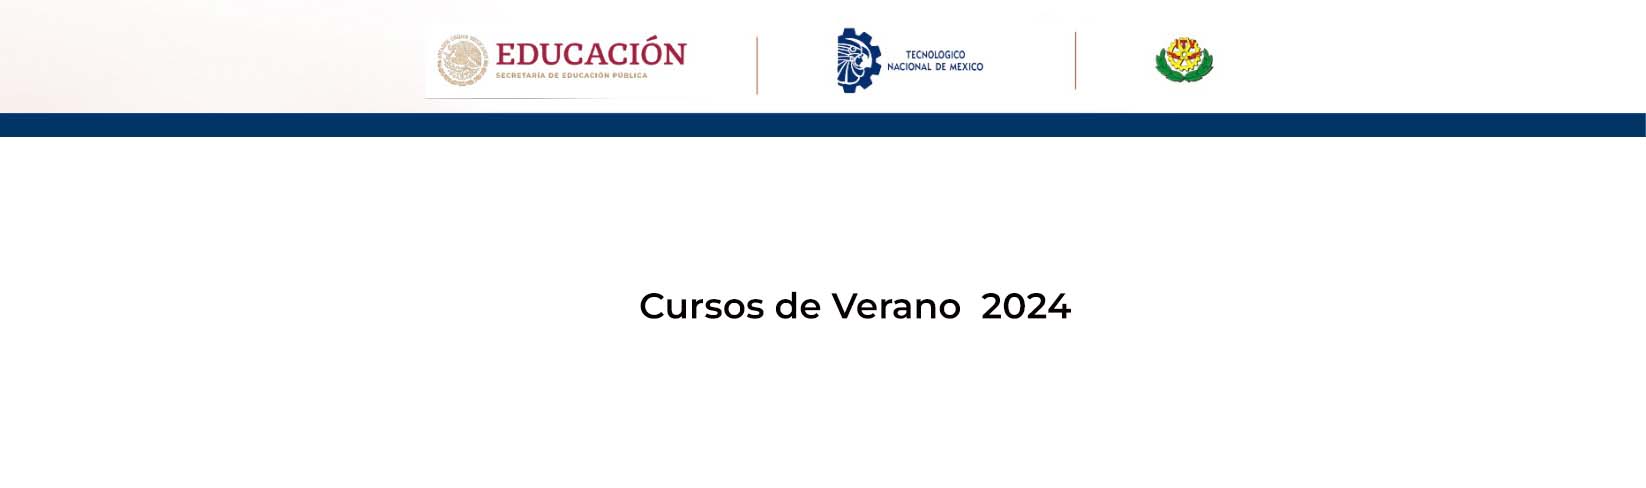 Verano cursos 2024 (Actualización 2)